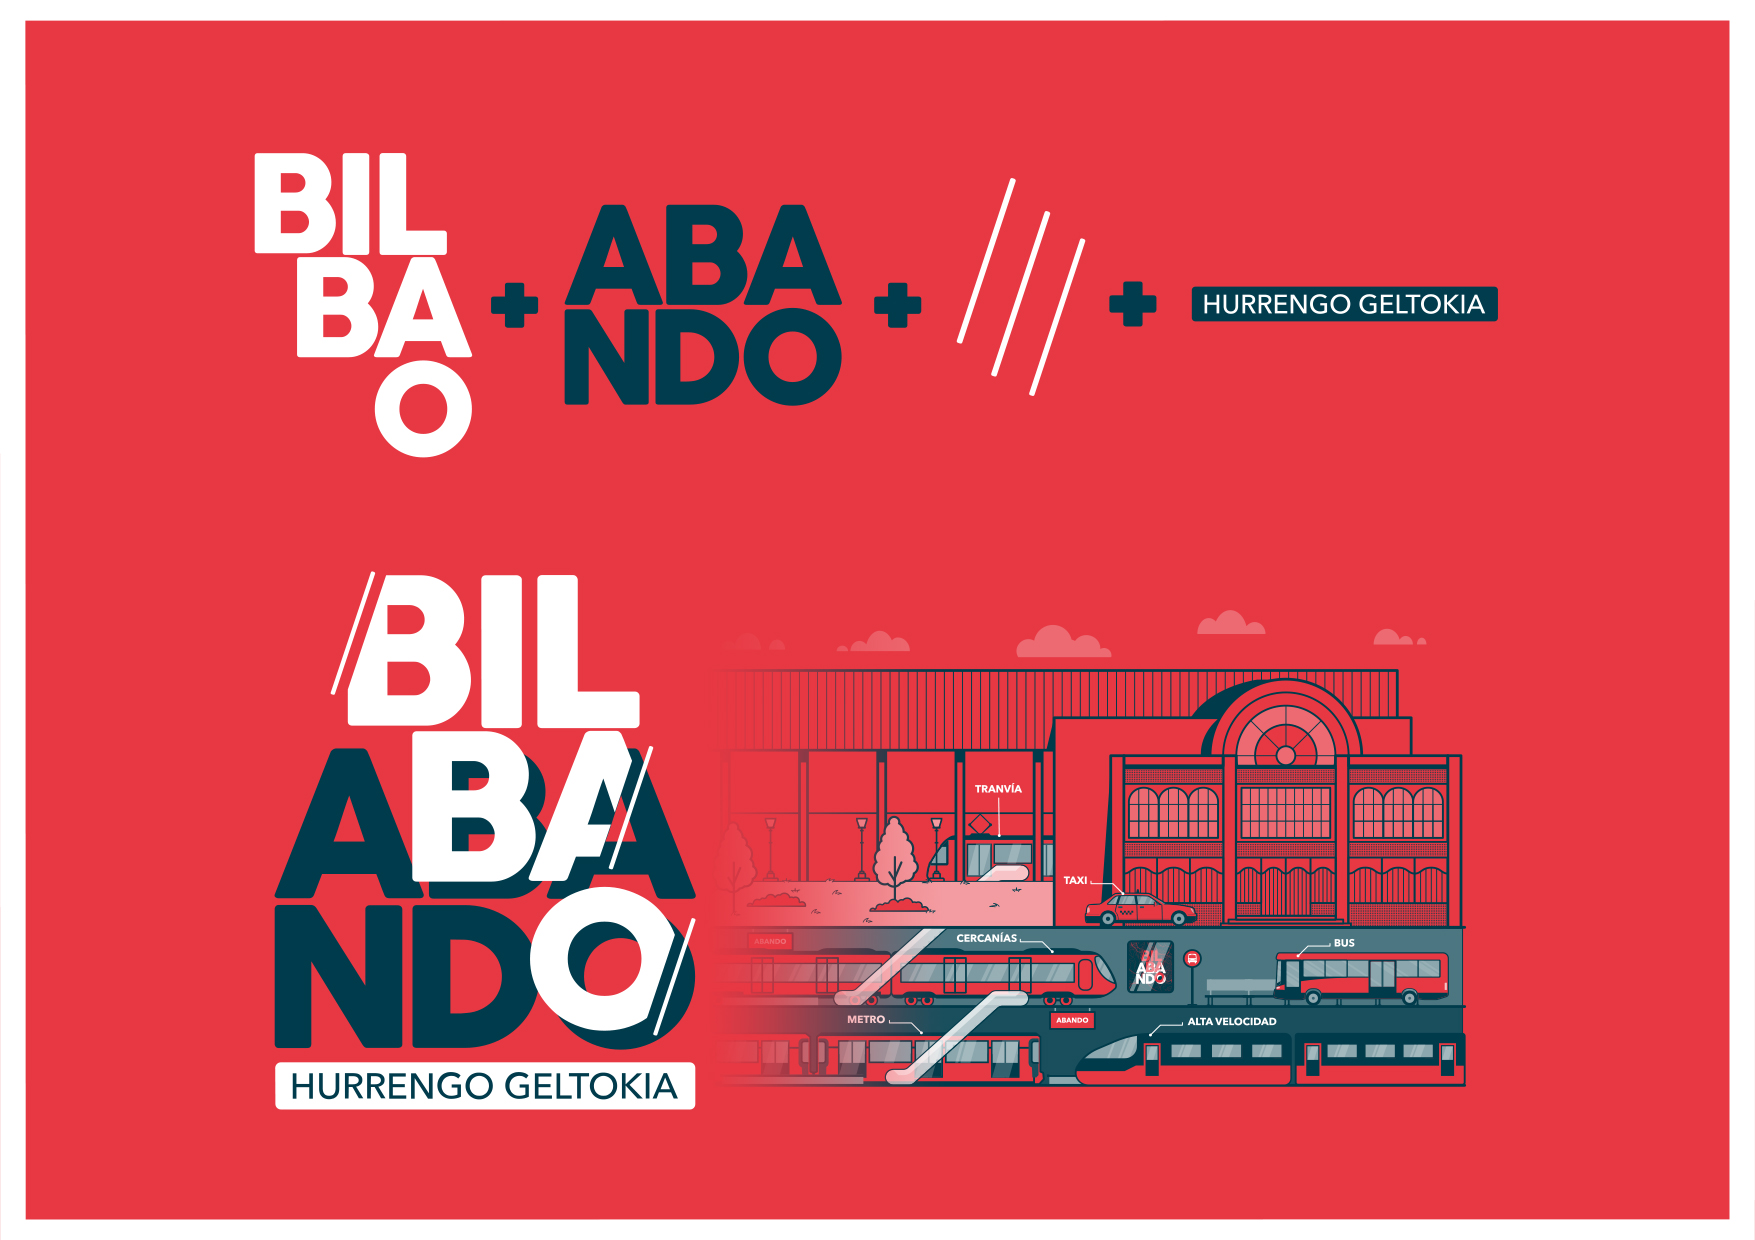 Bilbao-Abando. Hurrengo Geltokia by Sirope - Creative Work - $i